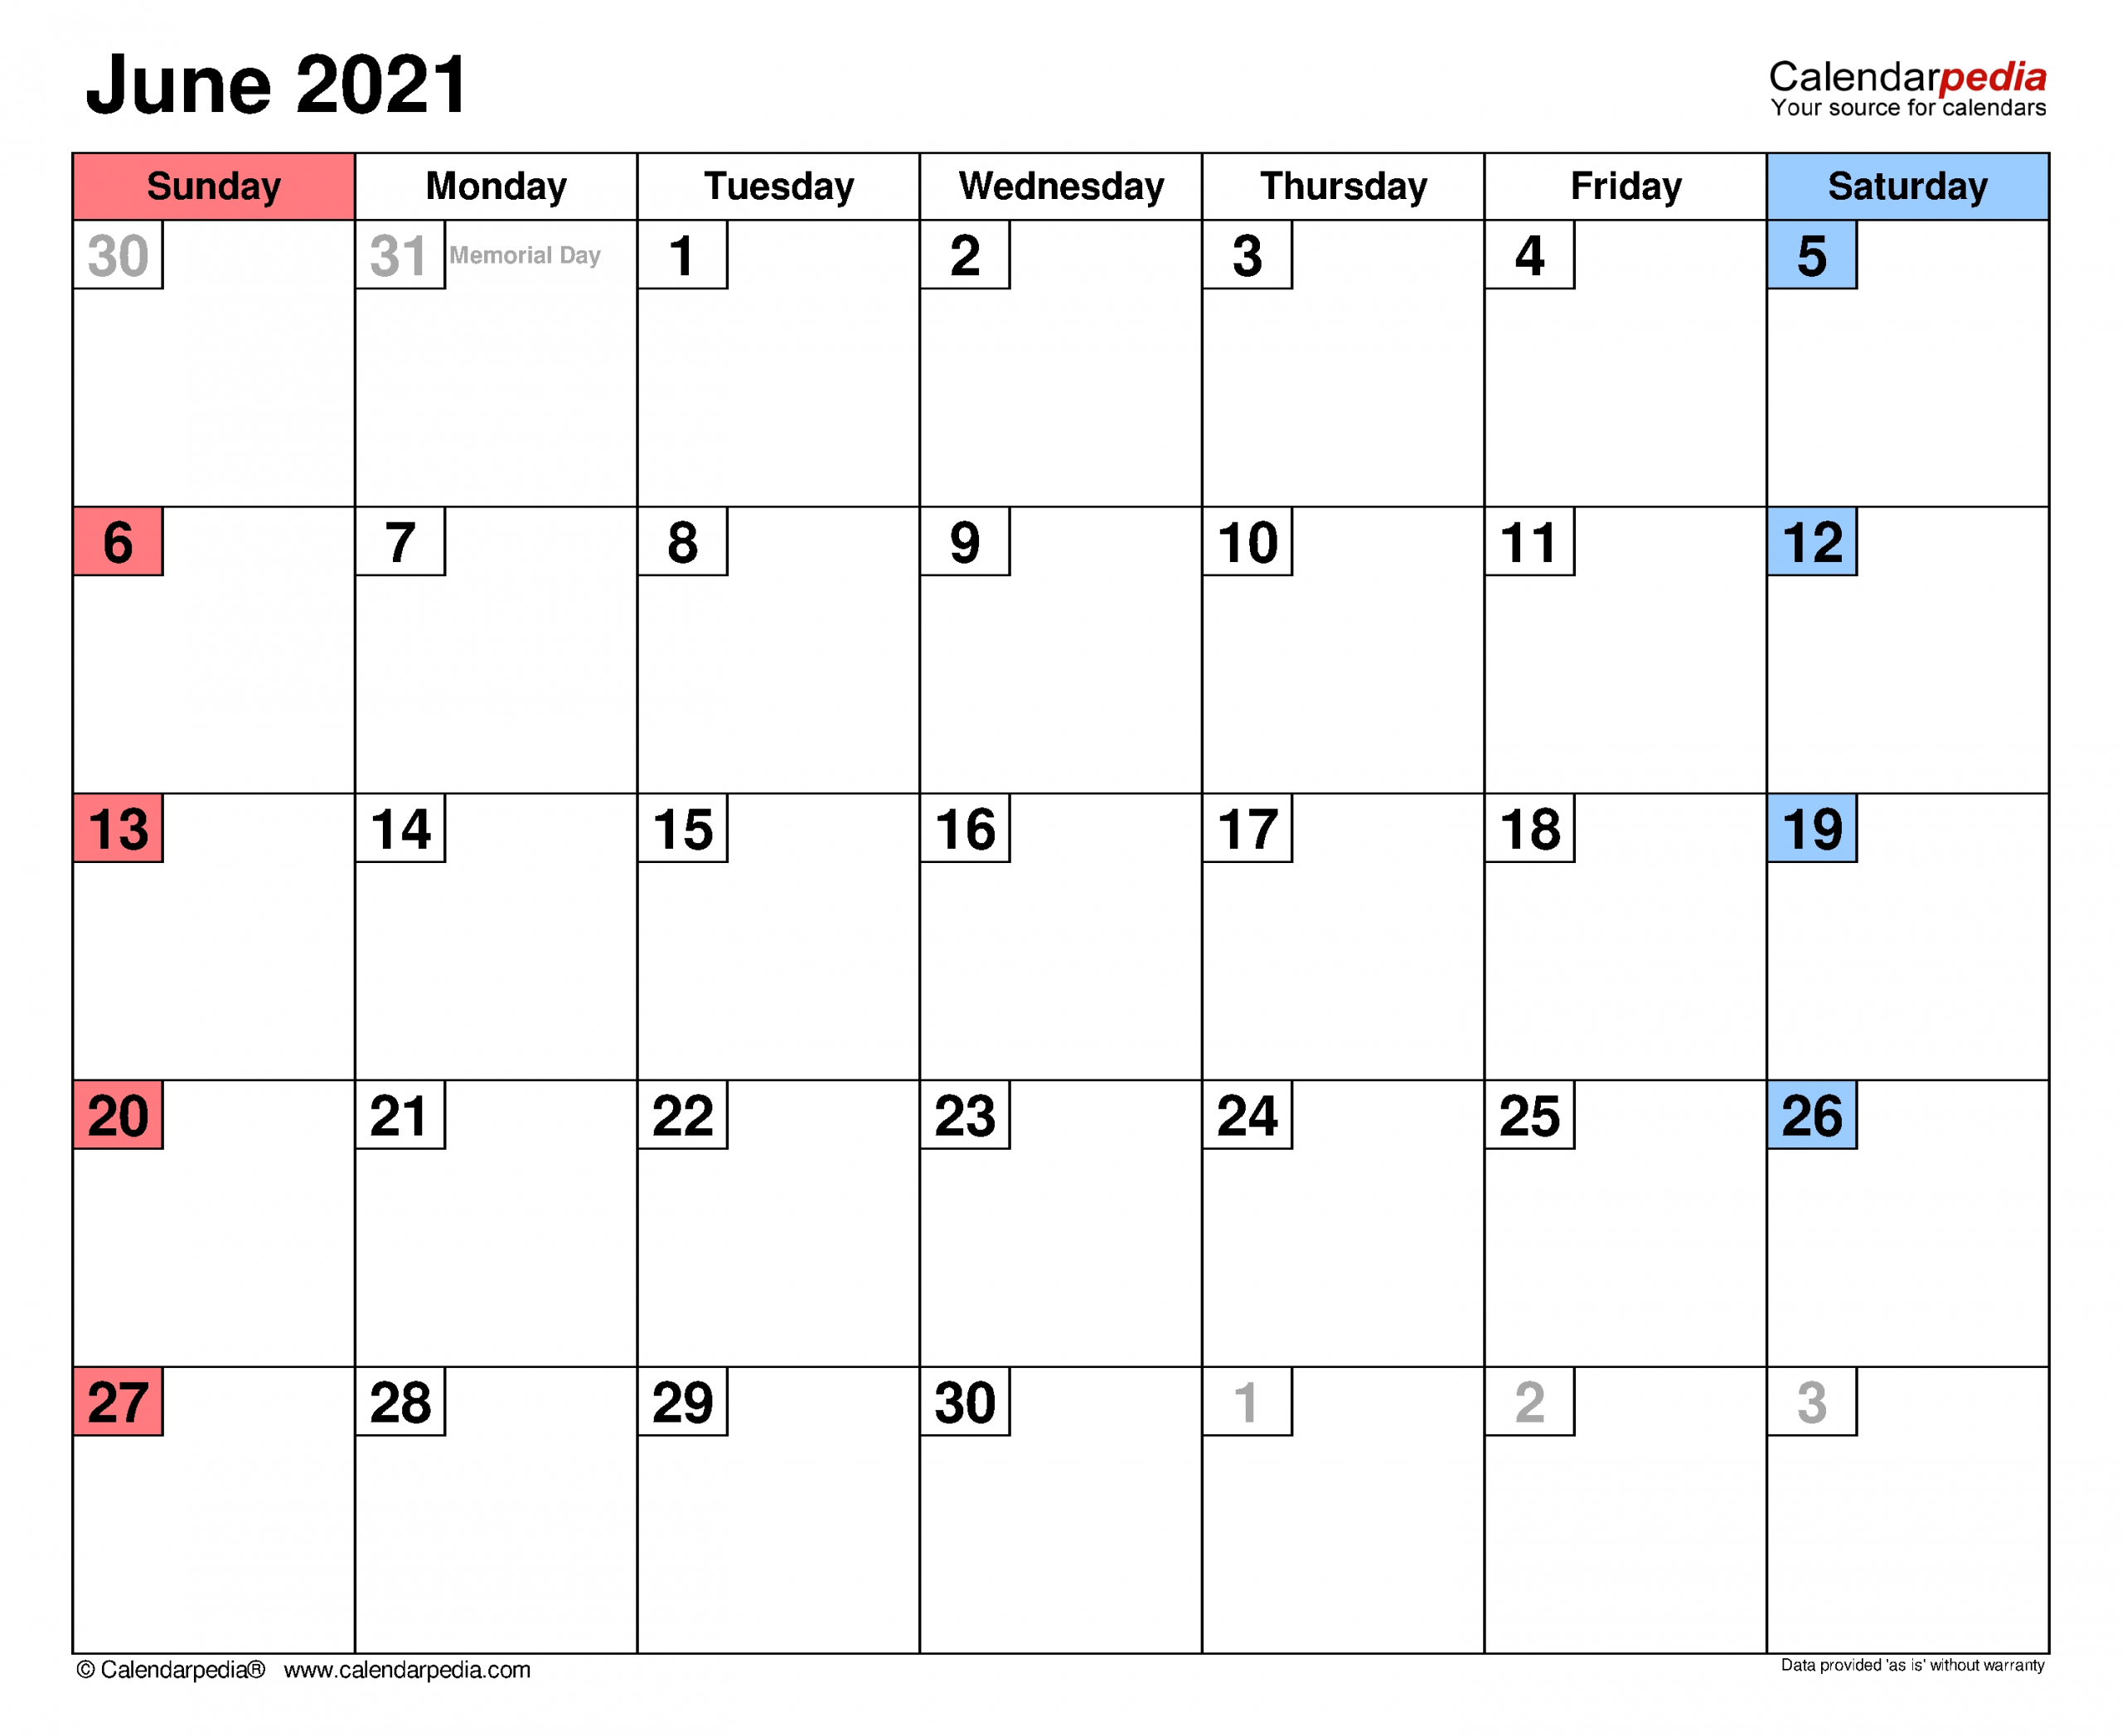 June 2021 Calendar | Templates For Word, Excel And Pdf-Calendar I Can Edit June 2021